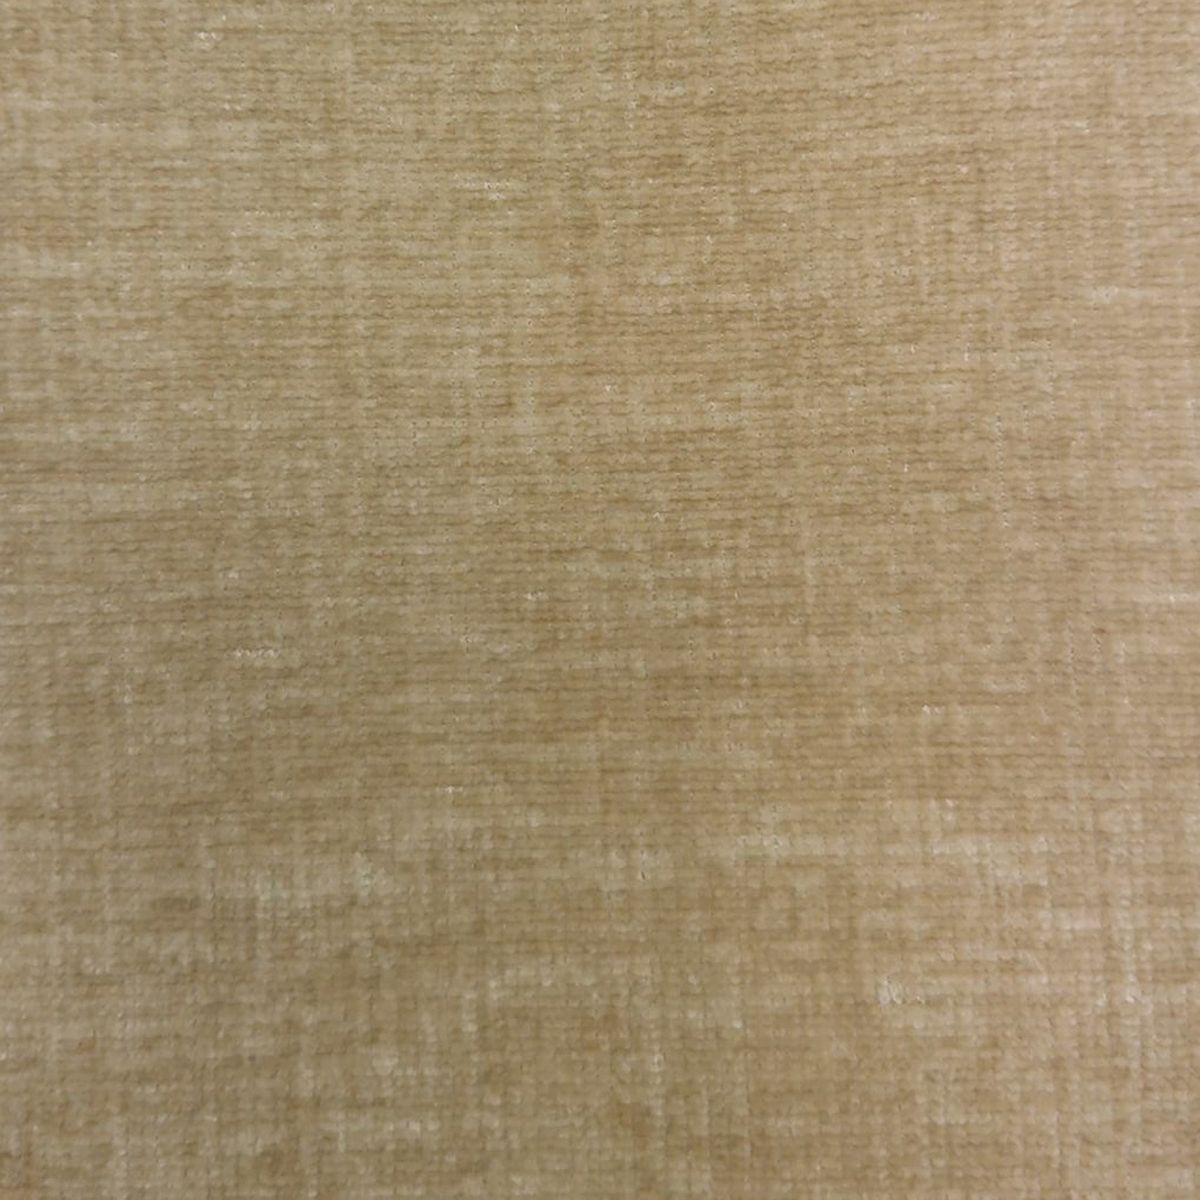 Isernia Wheat Velvet Fabric by Voyage Maison